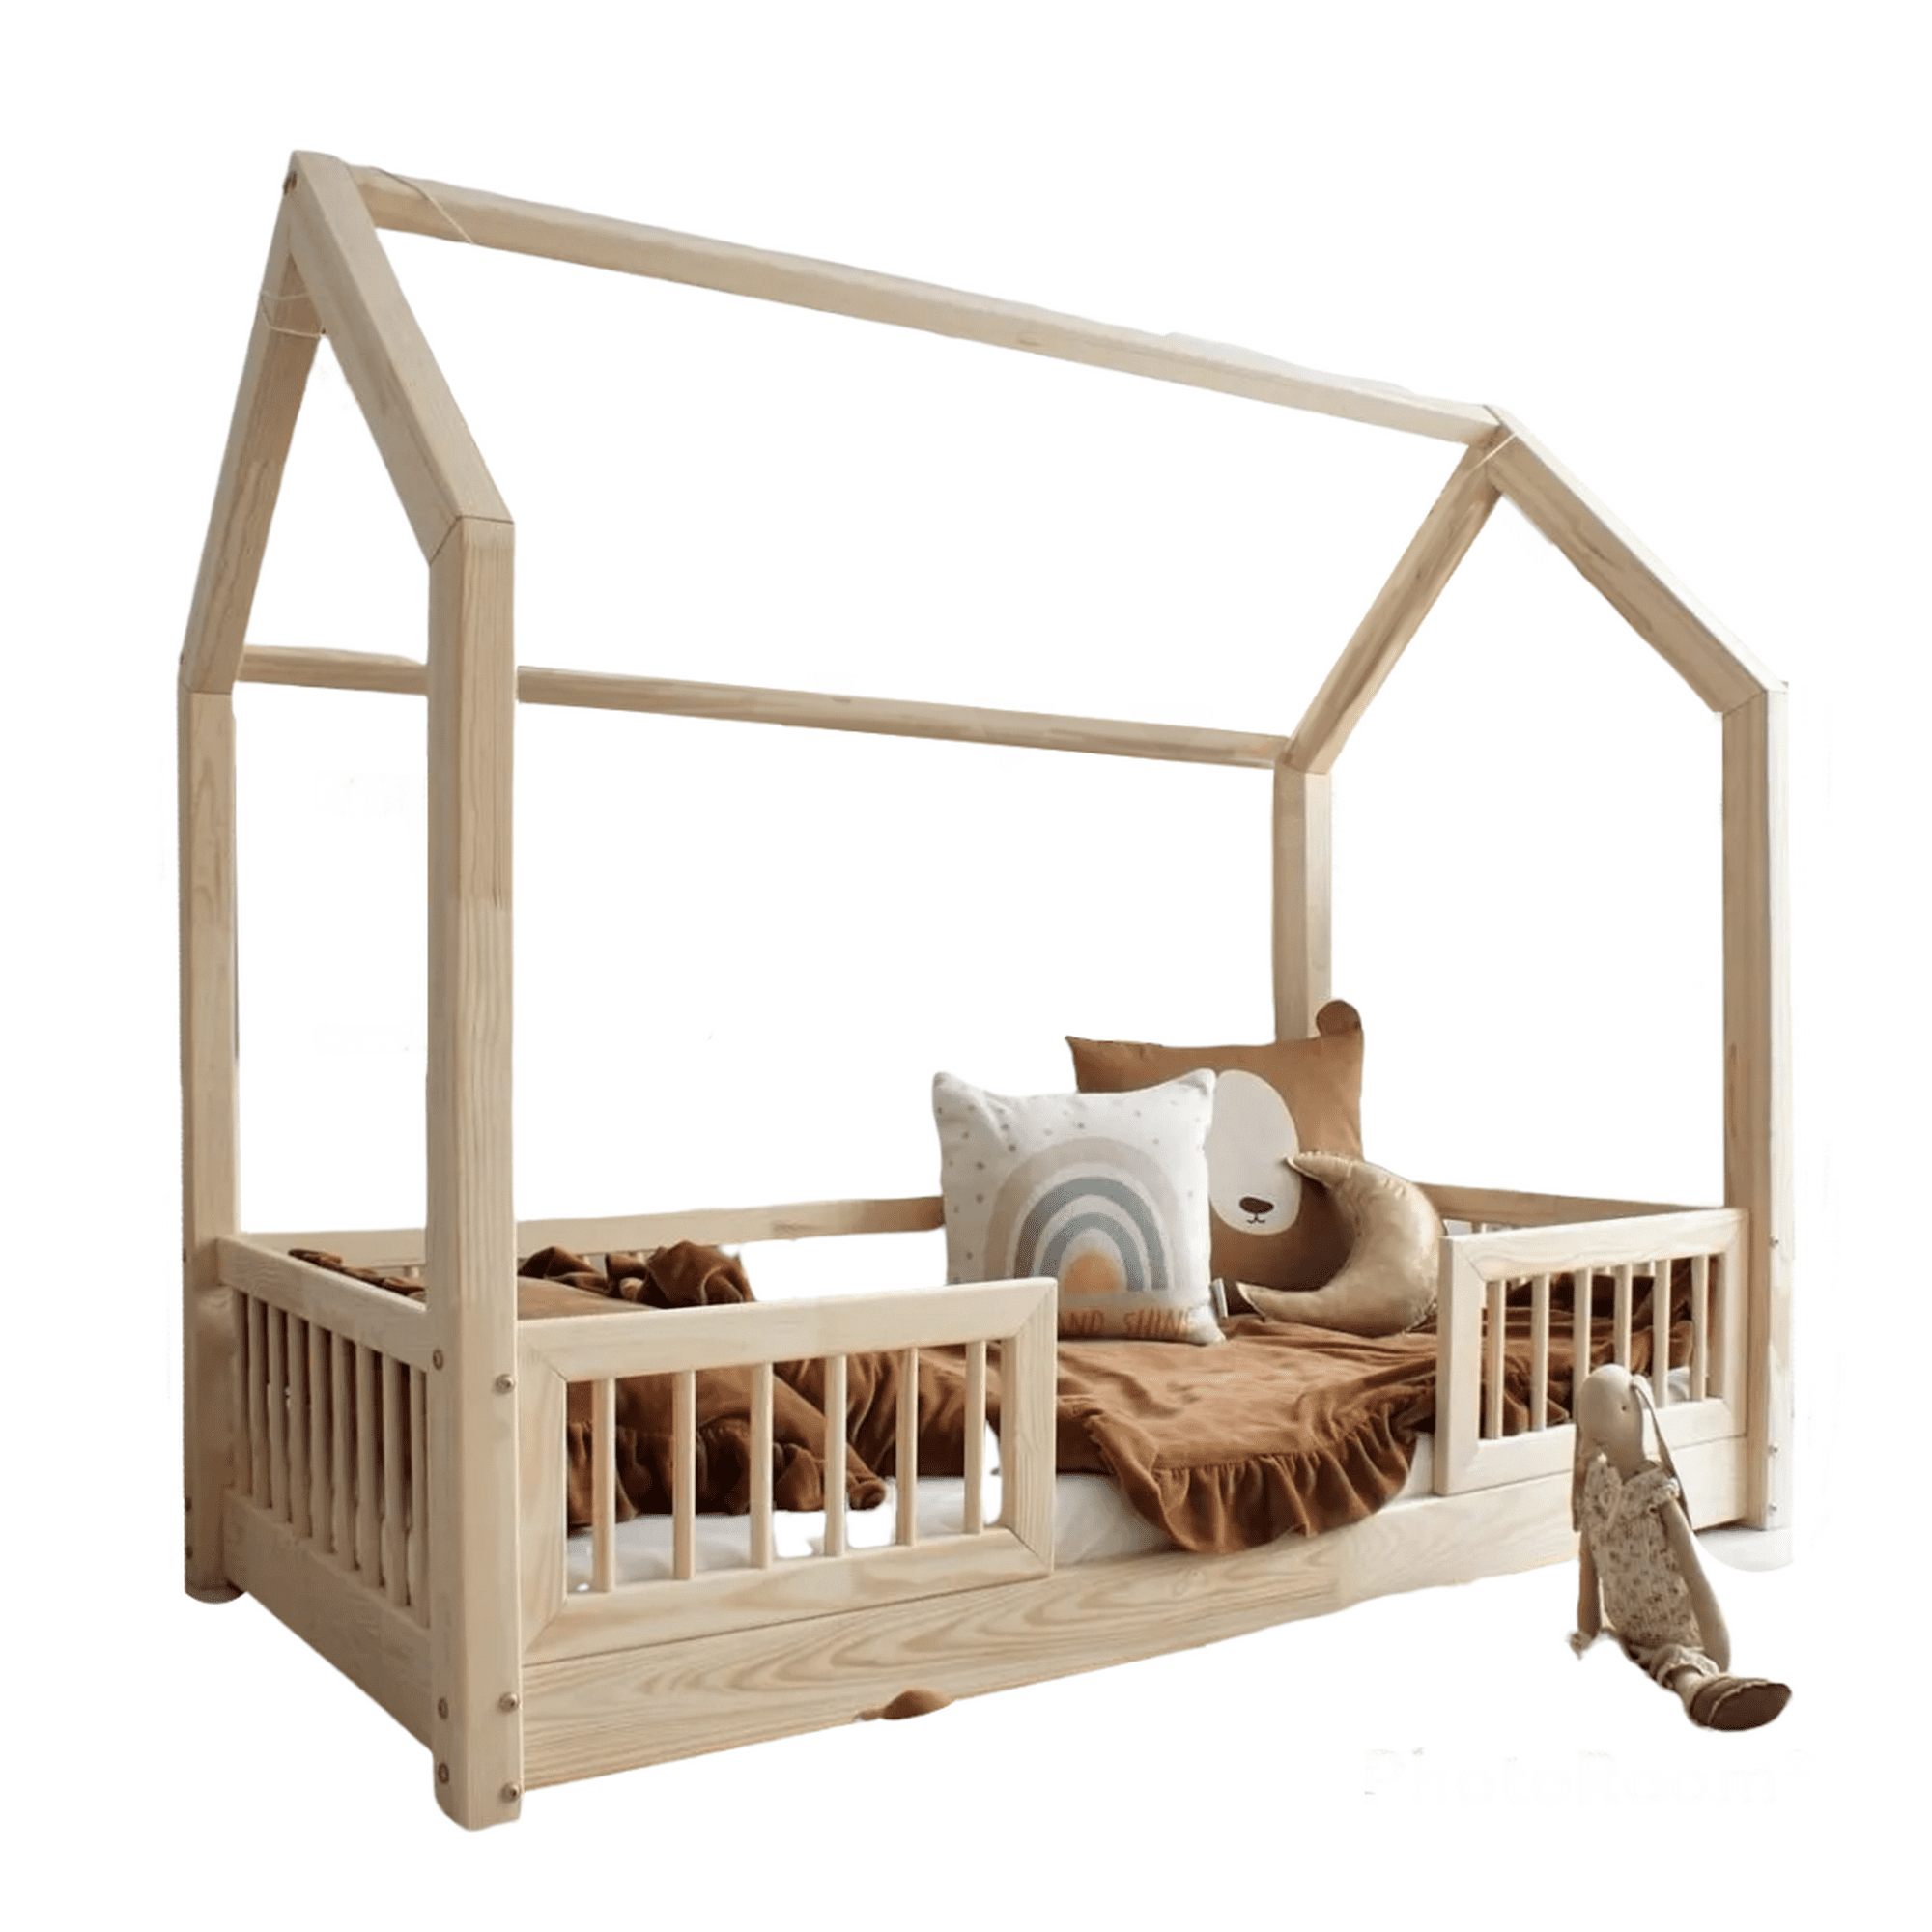 Cama infantil Montessori - muebles infantiles